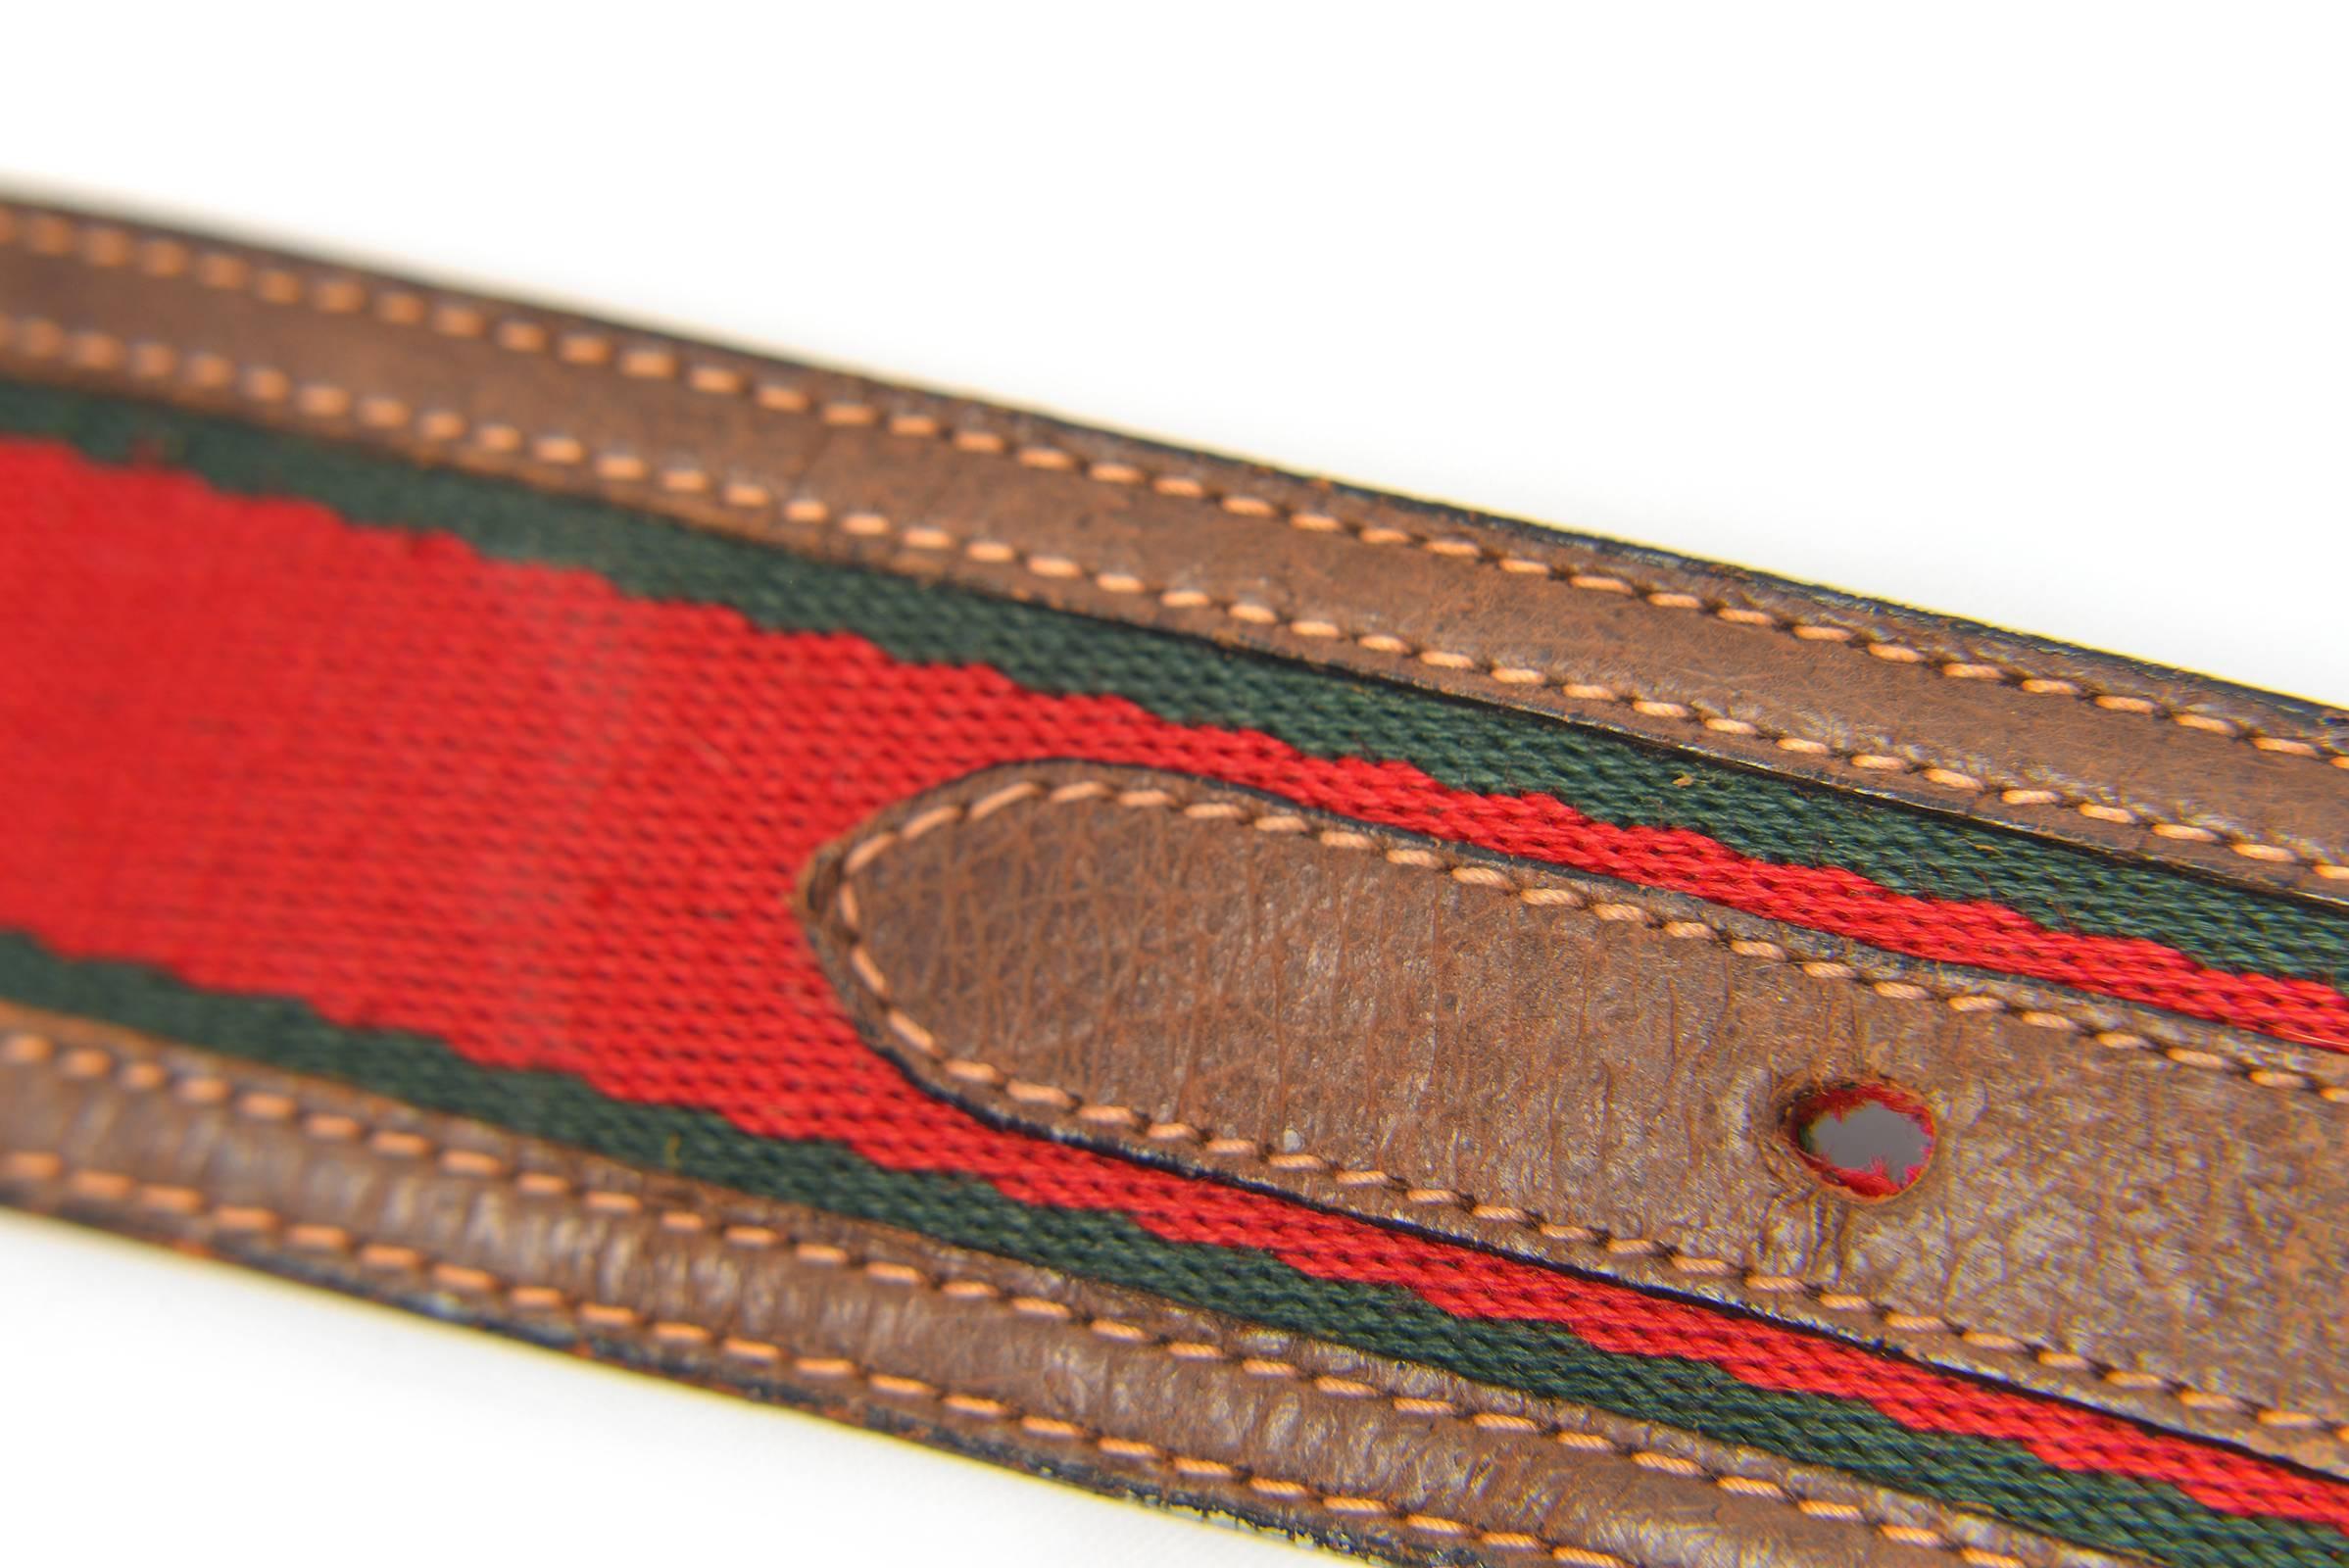 classic gucci belt